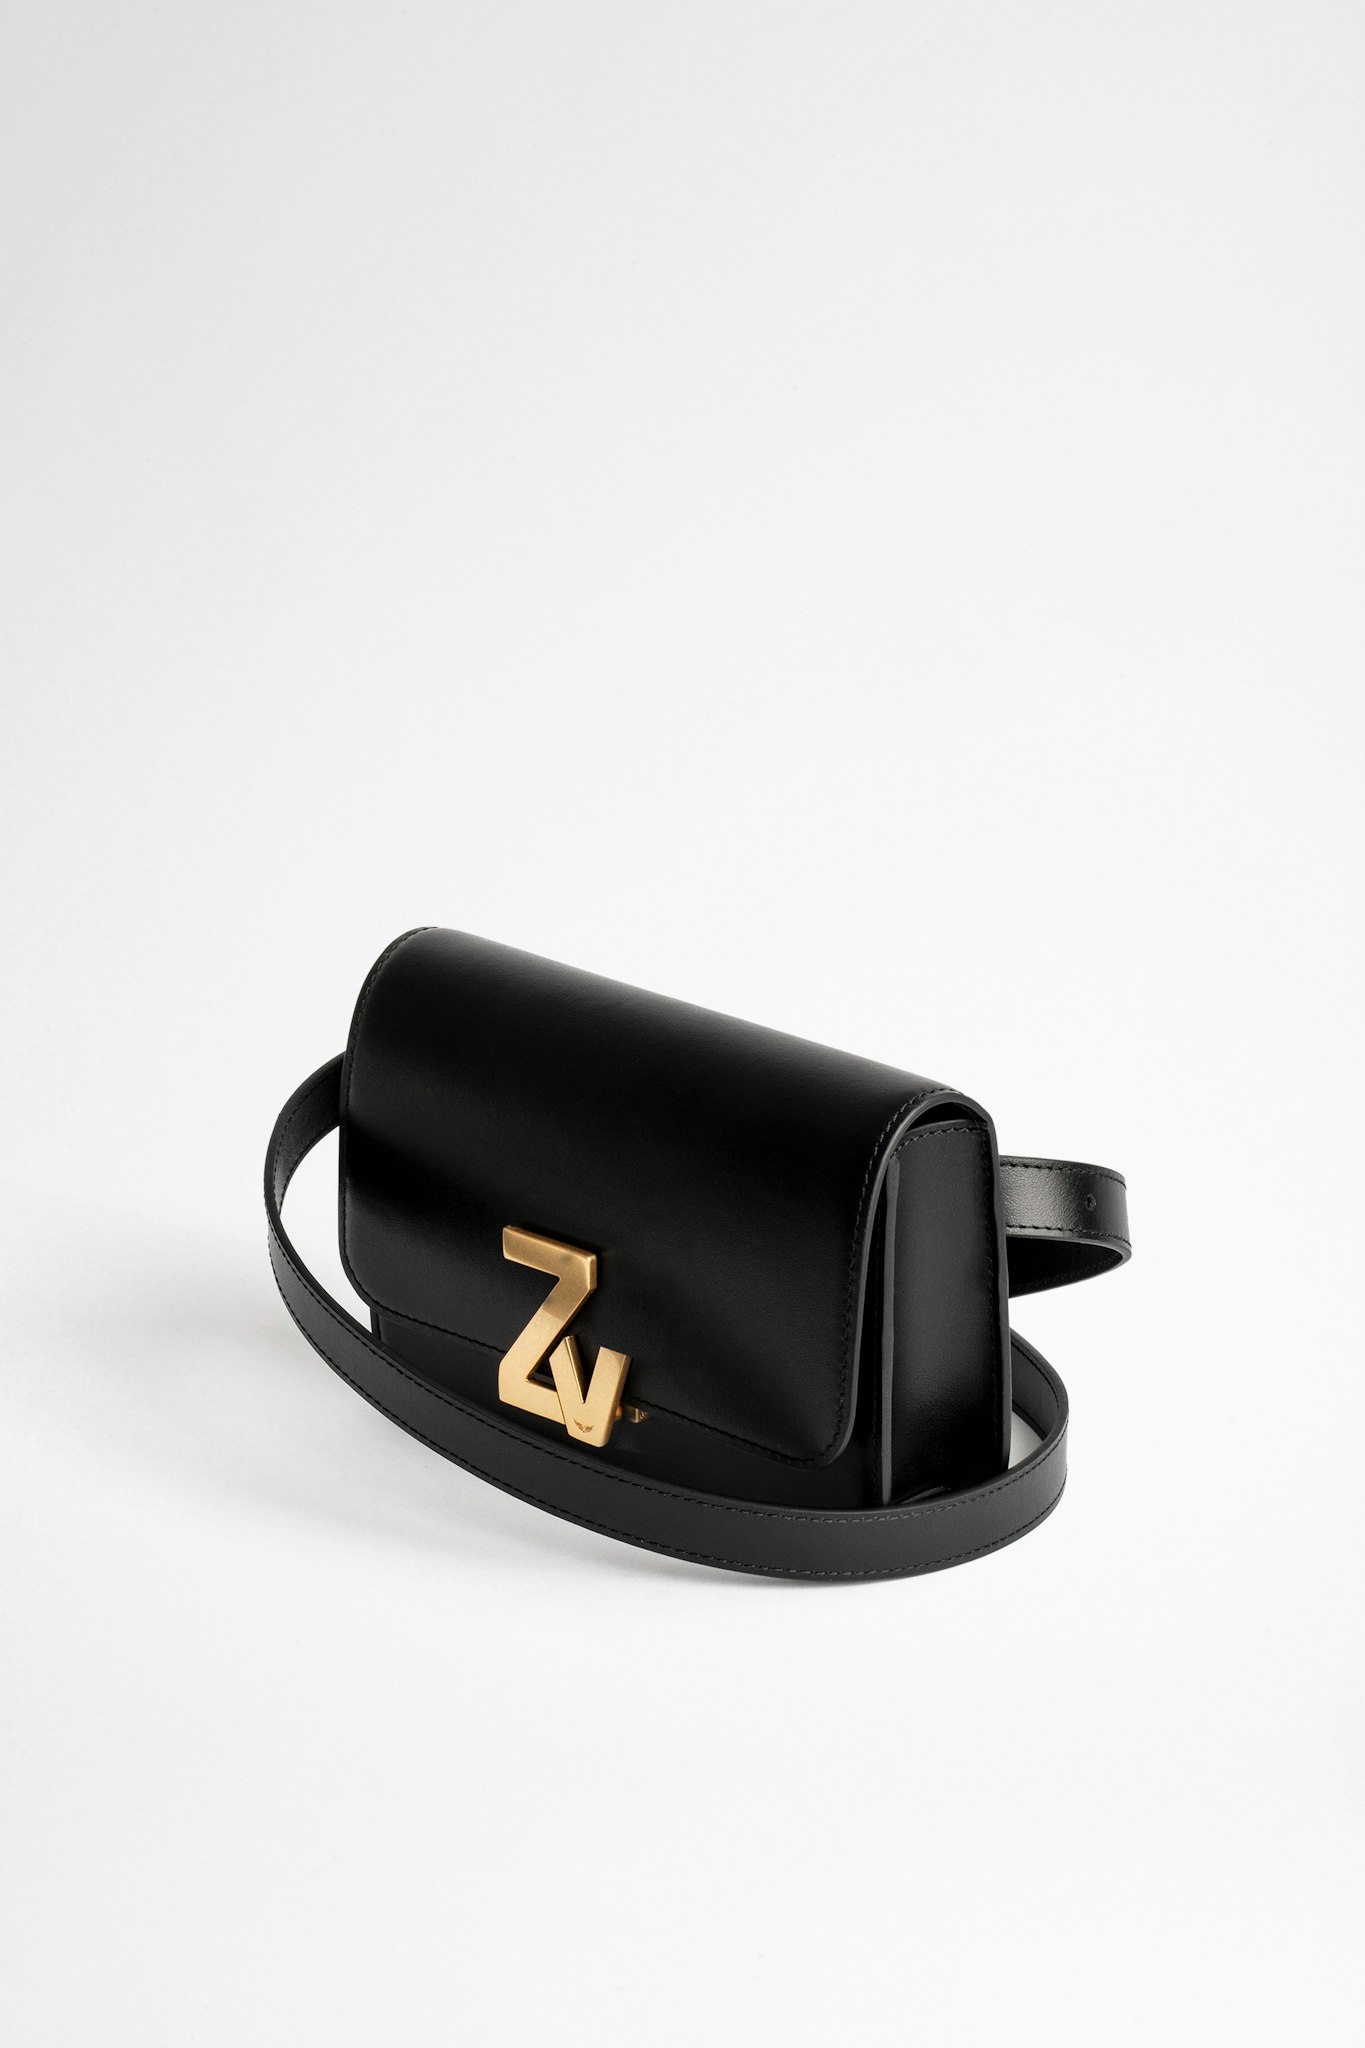 Sac ZV Initiale Le Belt Bag